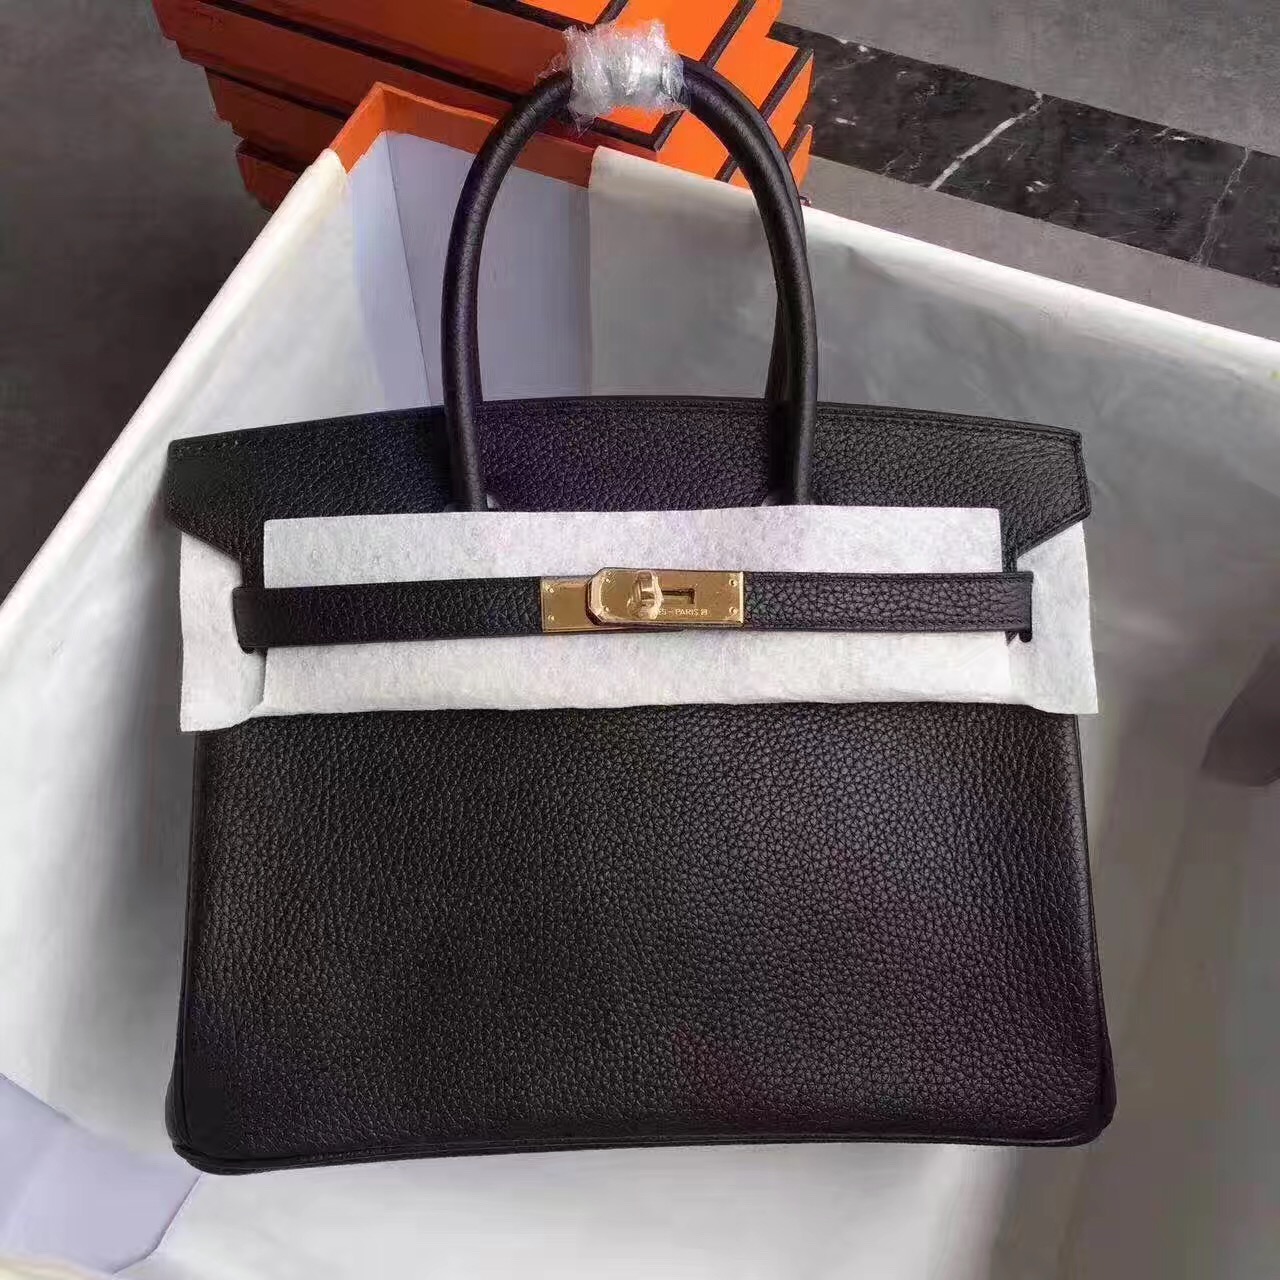 Hermes Birkin black top leather handbags